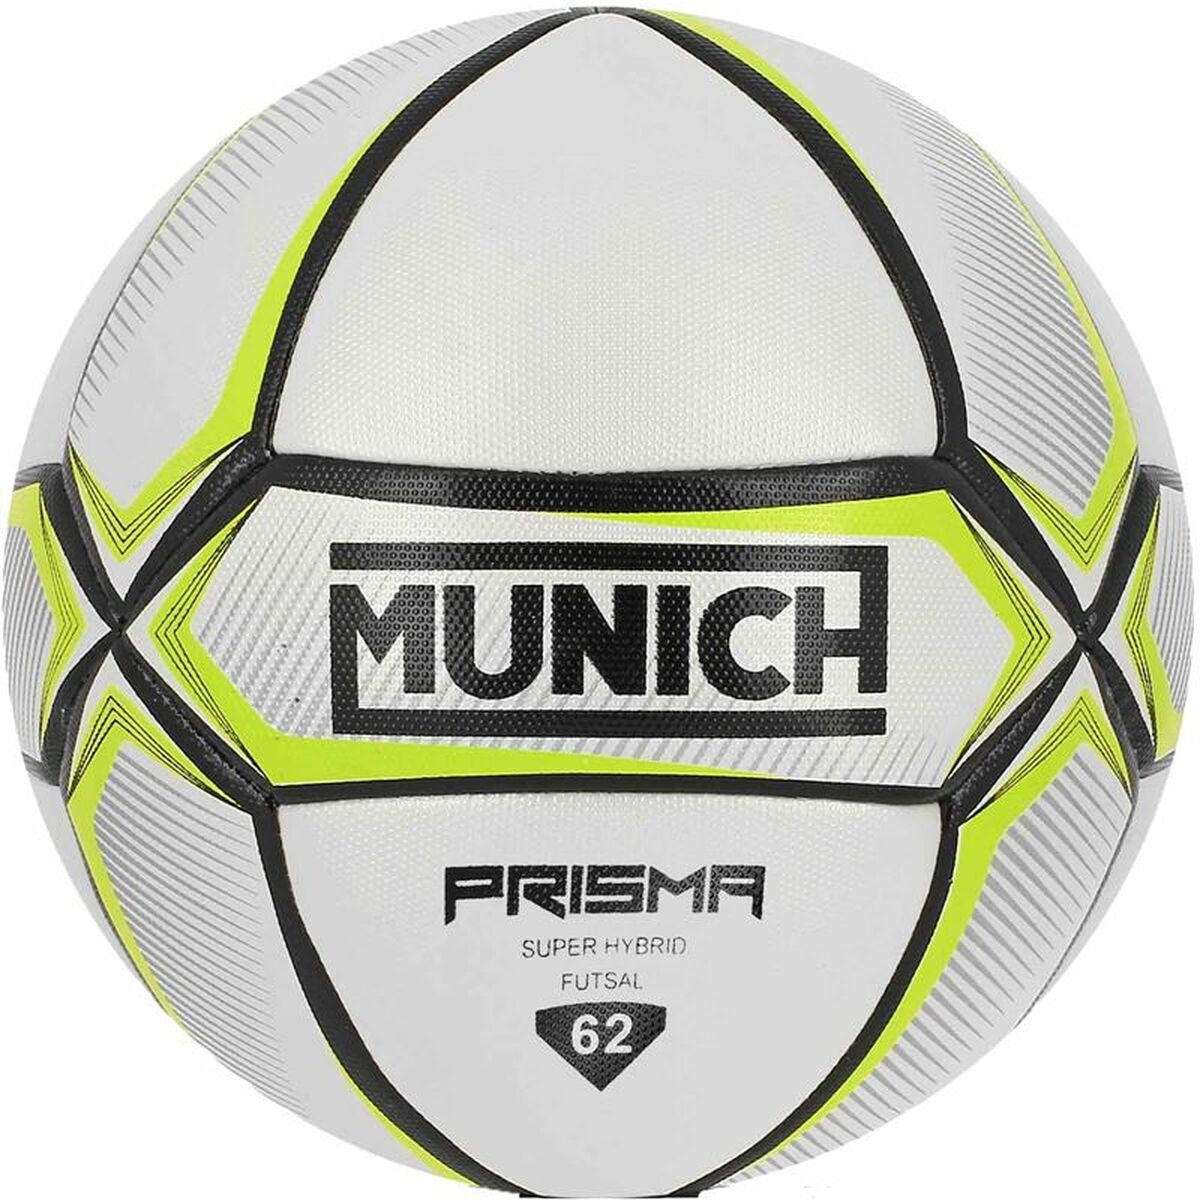 Super hybrid. Мяч футзальный. Мяч футзал. "Torres Futsal Match" арт.f31864. Мяч футзальный чёрно белый. Munich Prisma.